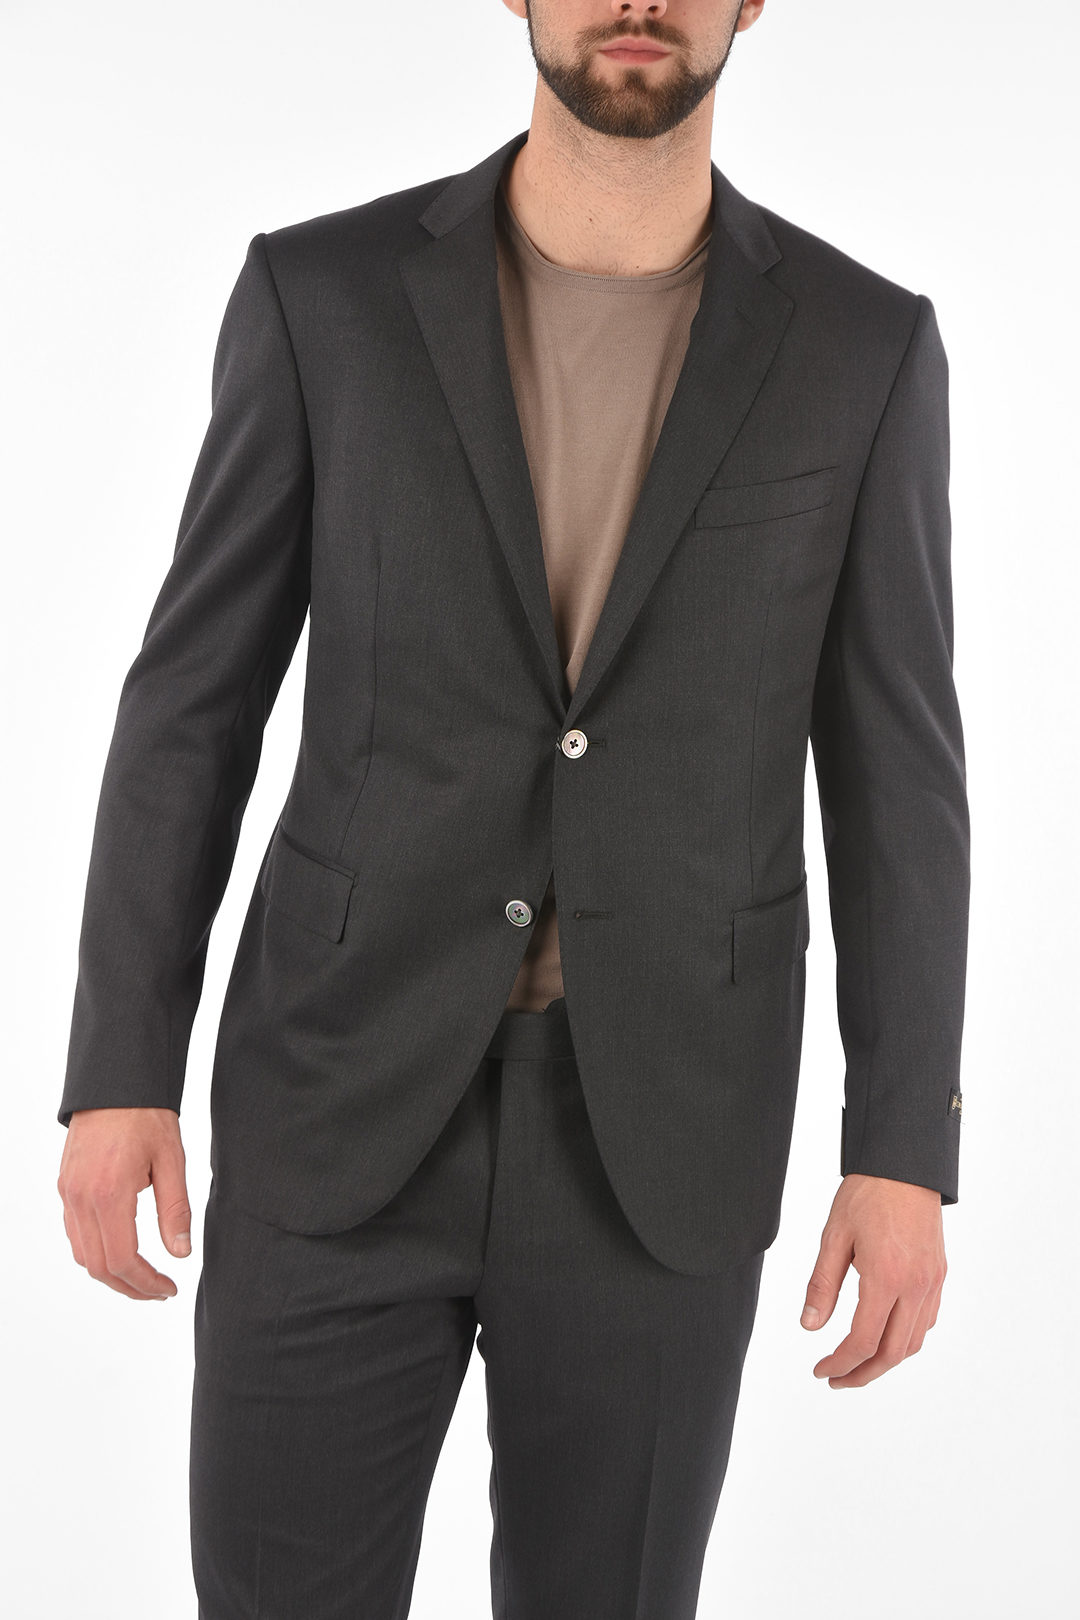 Corneliani Lined Suit with Notch Lapel and Flap Pockets men - Glamood ...